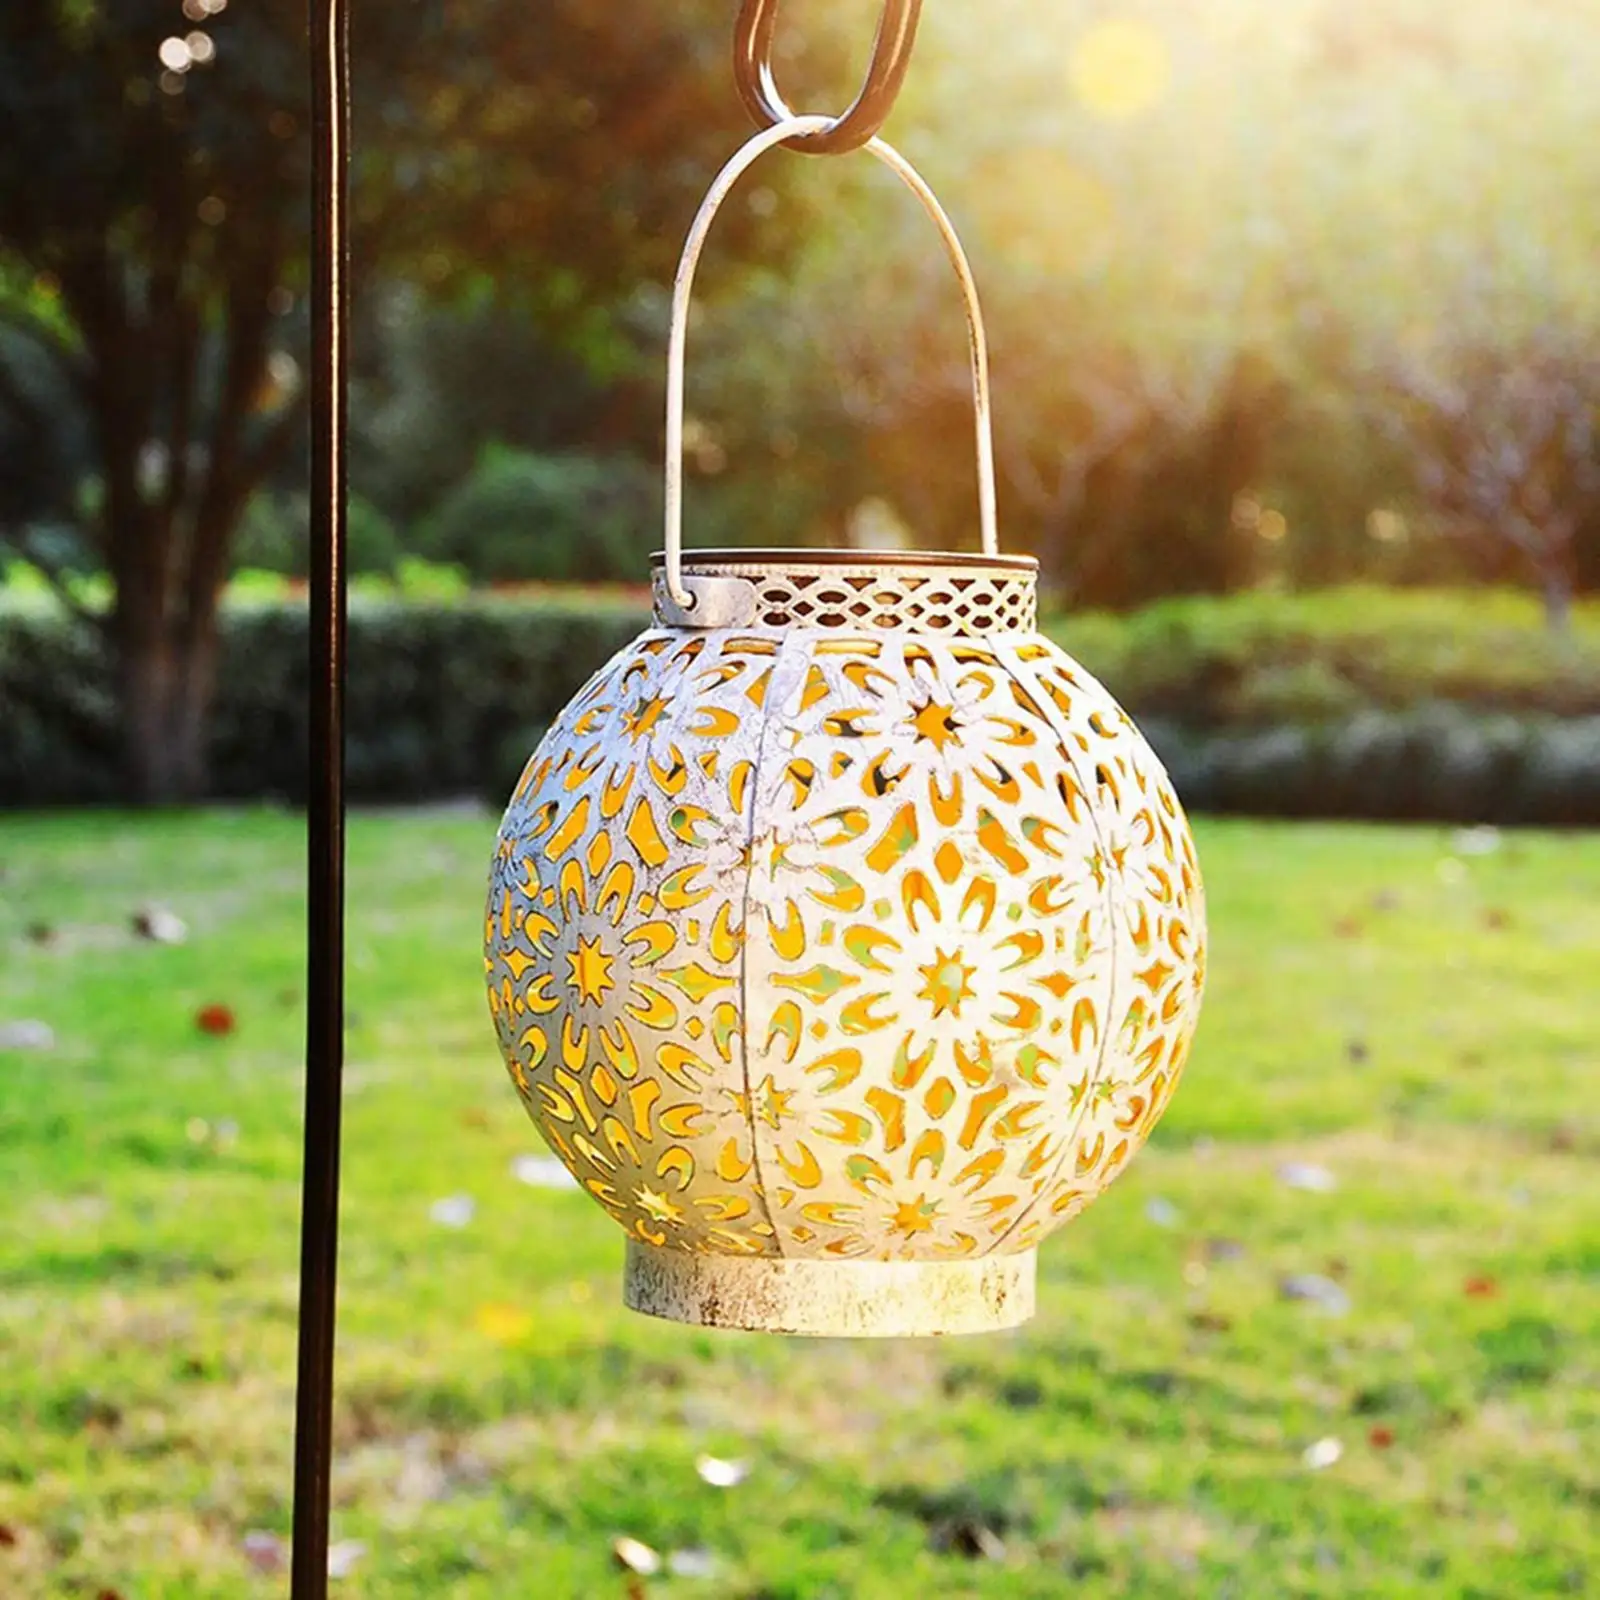 Hanging Lanterns Retro Hollow Solar Light with Handle Outdoor Garden Lights Decor for Yard Tree Fence Patio Yard Light